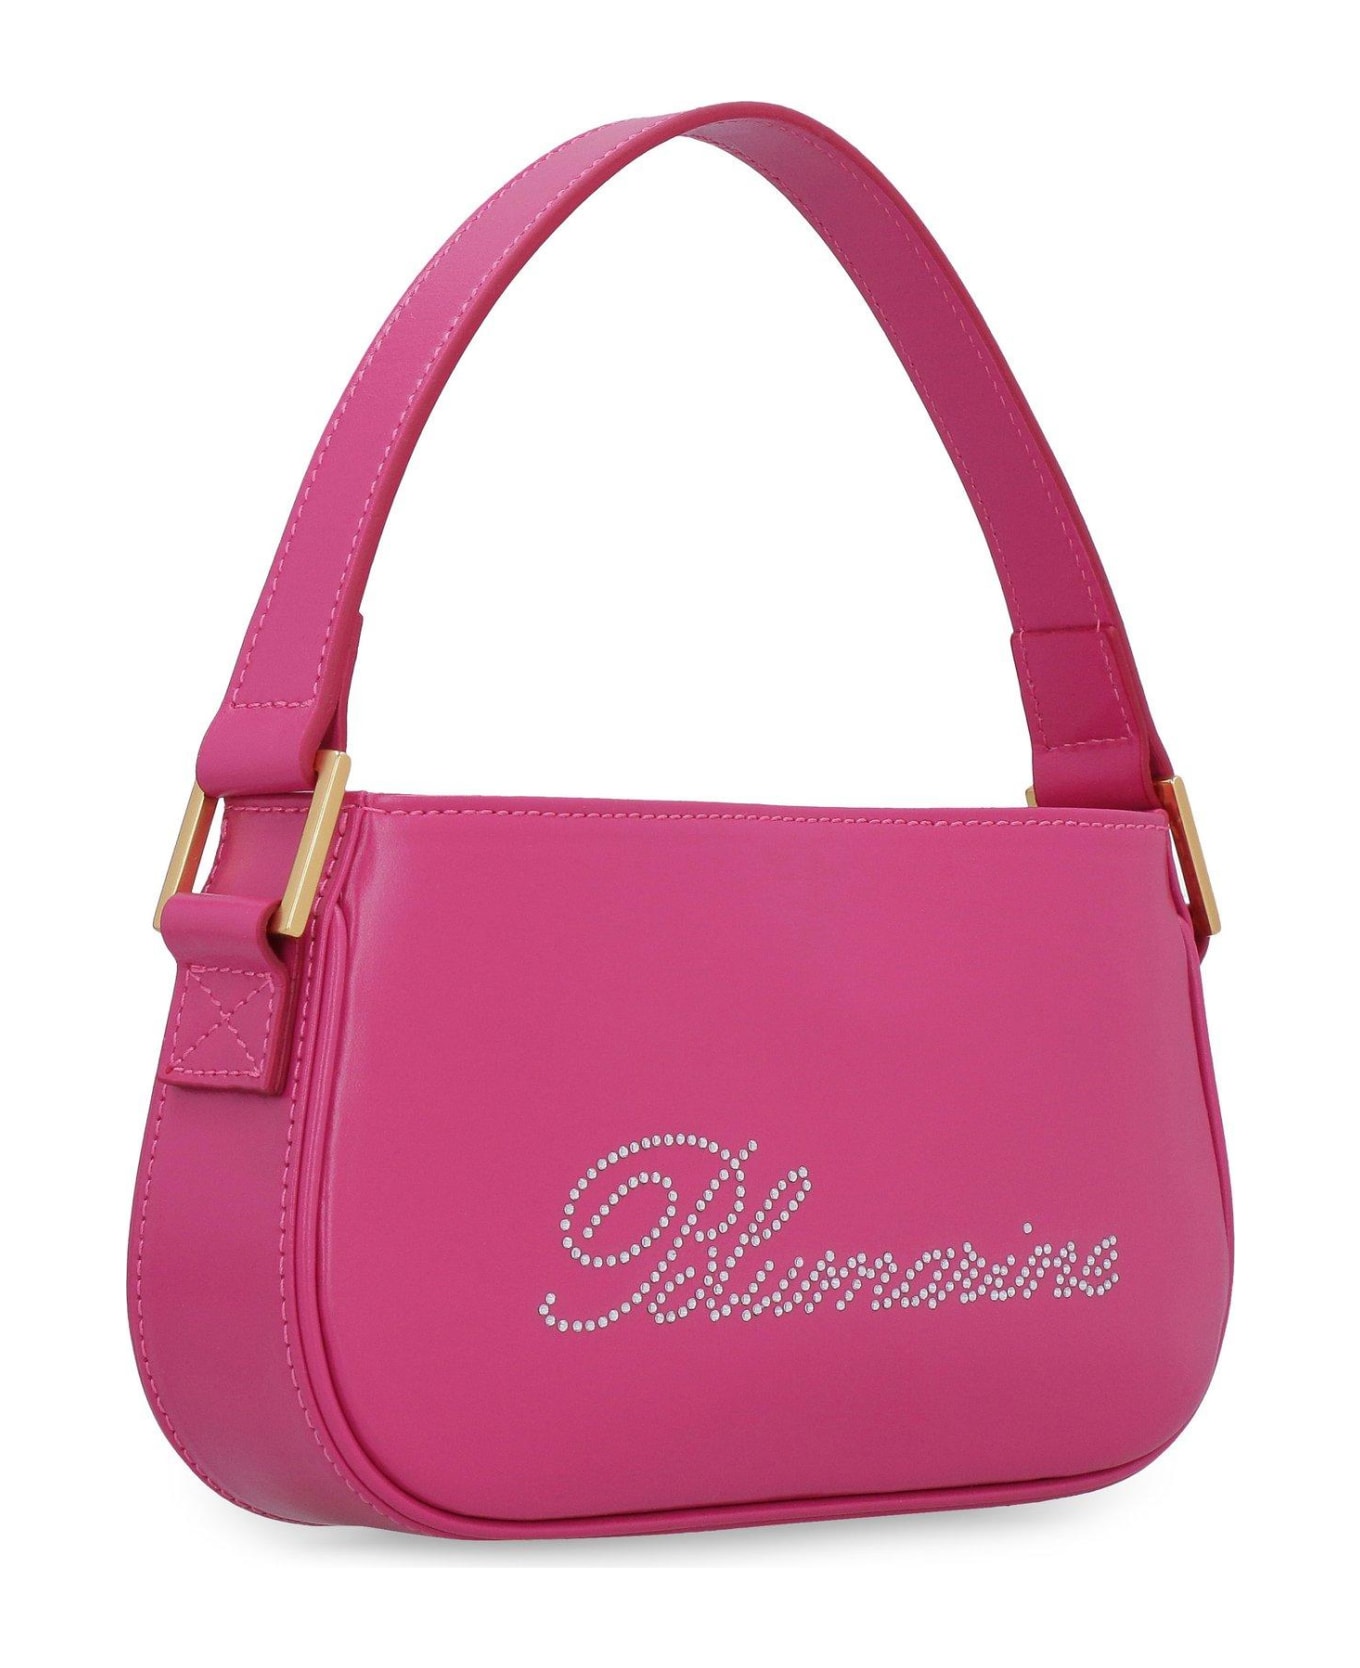 Blumarine Logo Rhinestone Embellished Shoulder Bag - White トートバッグ